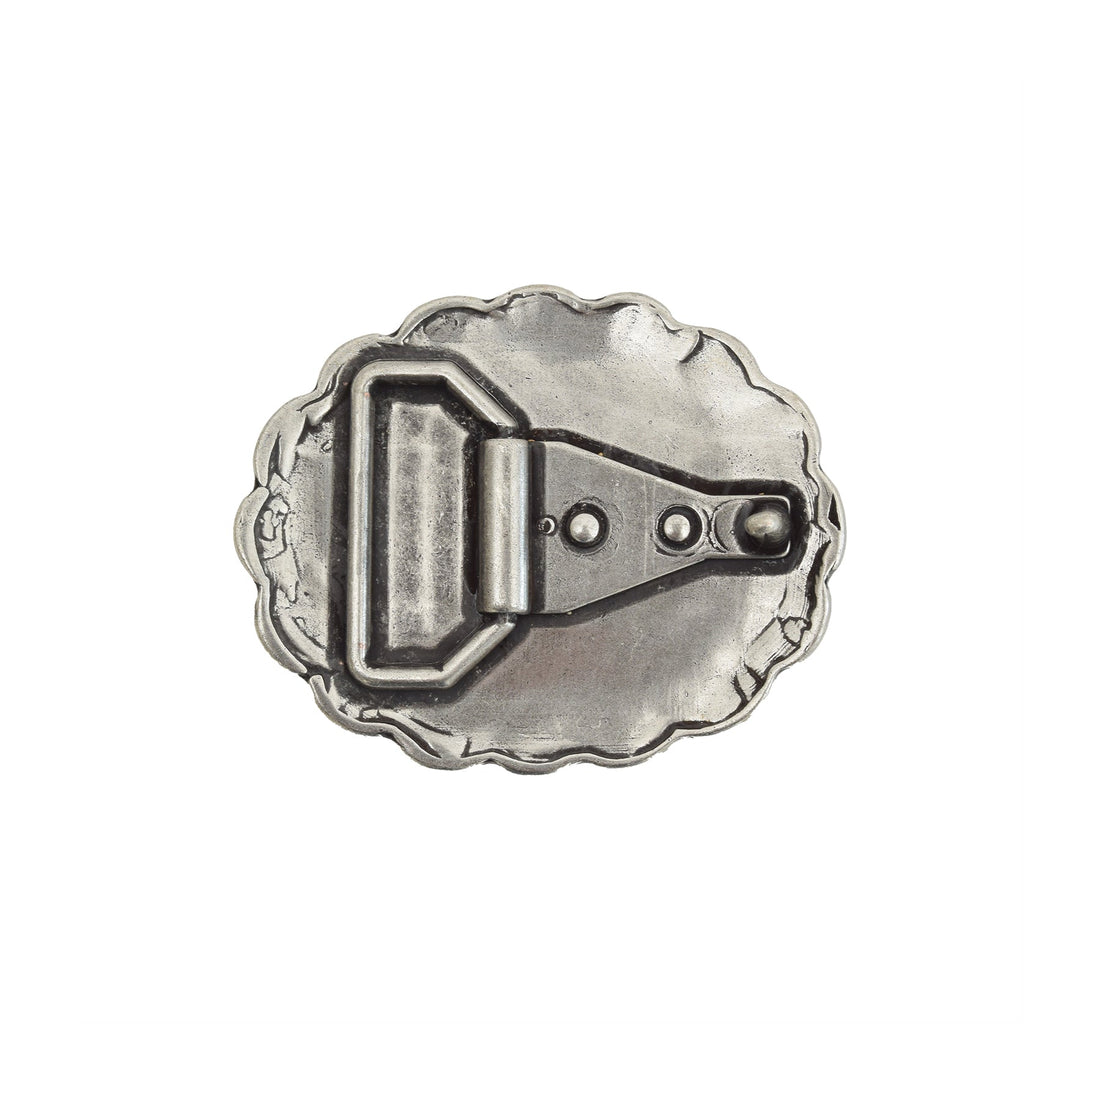 Thatcher Silver Toned Removable Metal Belt Buckle - Buckles Zengoda Shop online from Artisan Brands